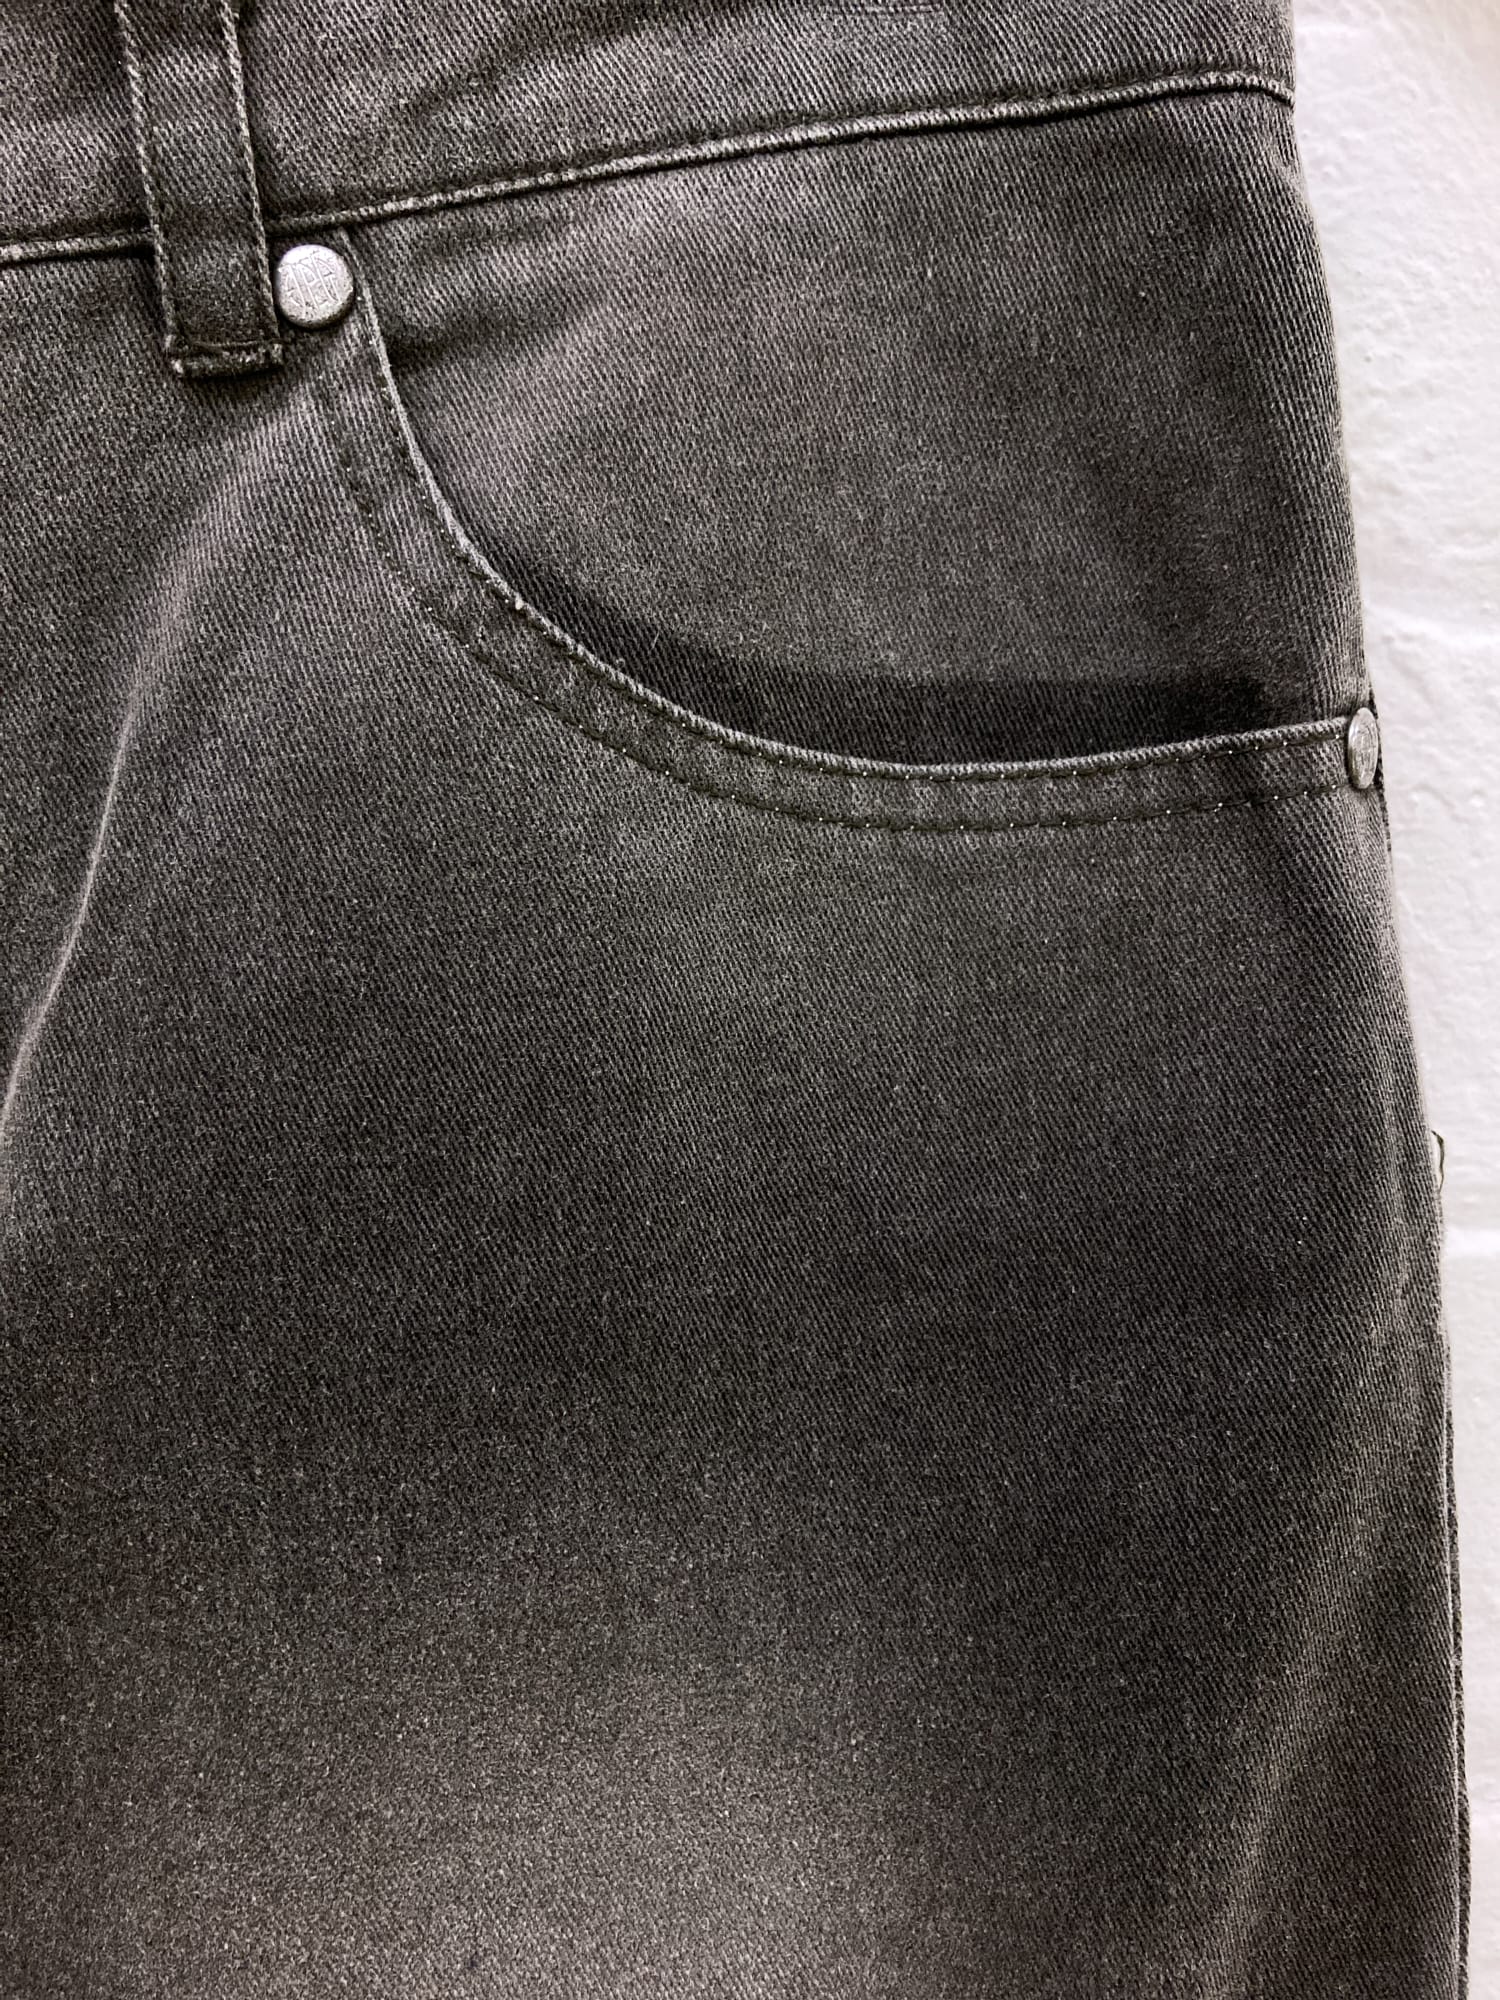 Jean Paul Gaultier Jean's 1990s distressed grey denim knee length skirt - 38